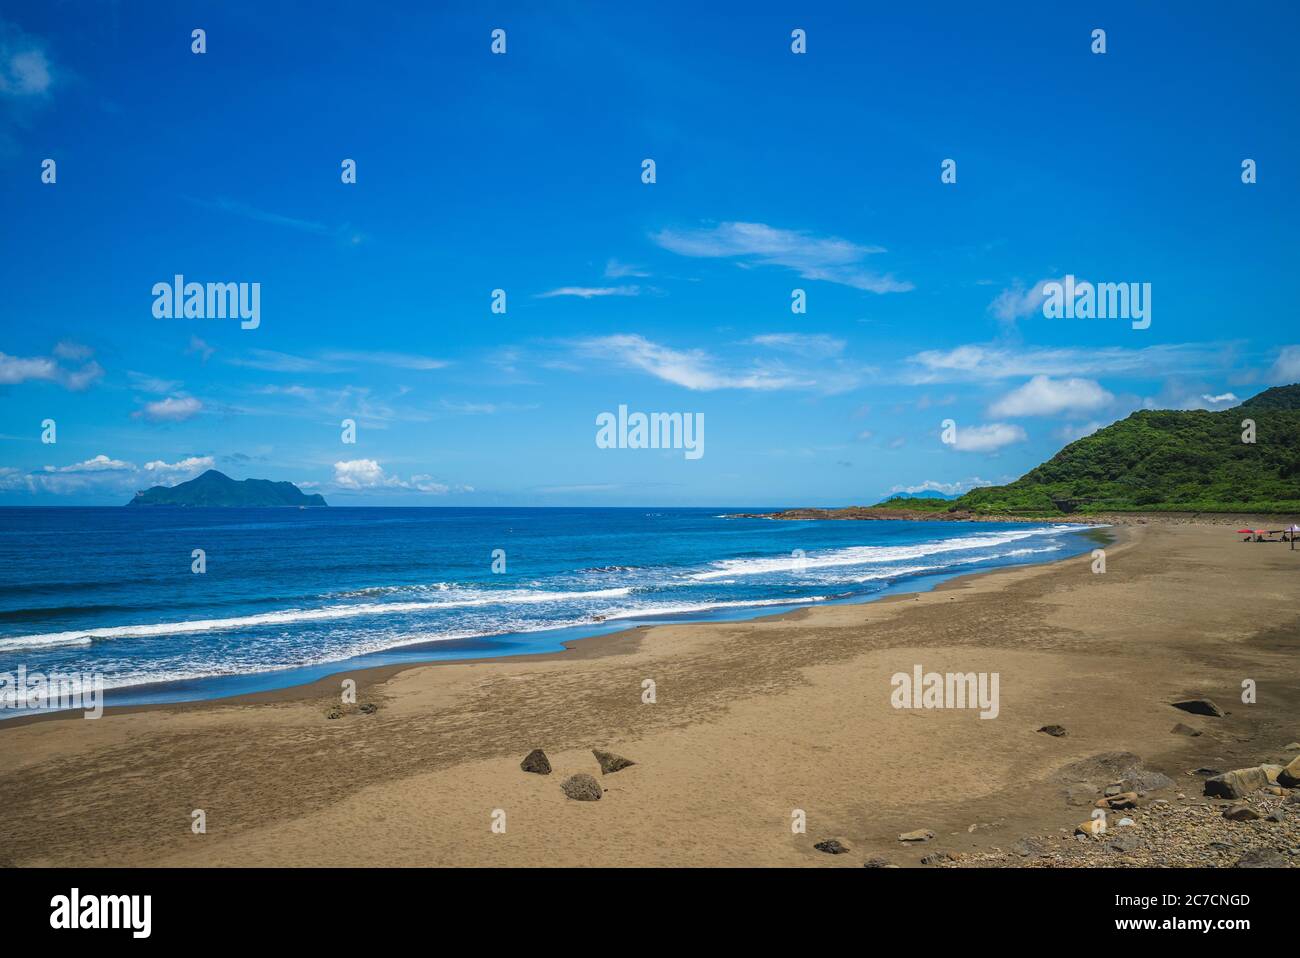 Scenery of Honeymoon Bay and Gueishan Island in Yilan, Taiwan Stock Photo